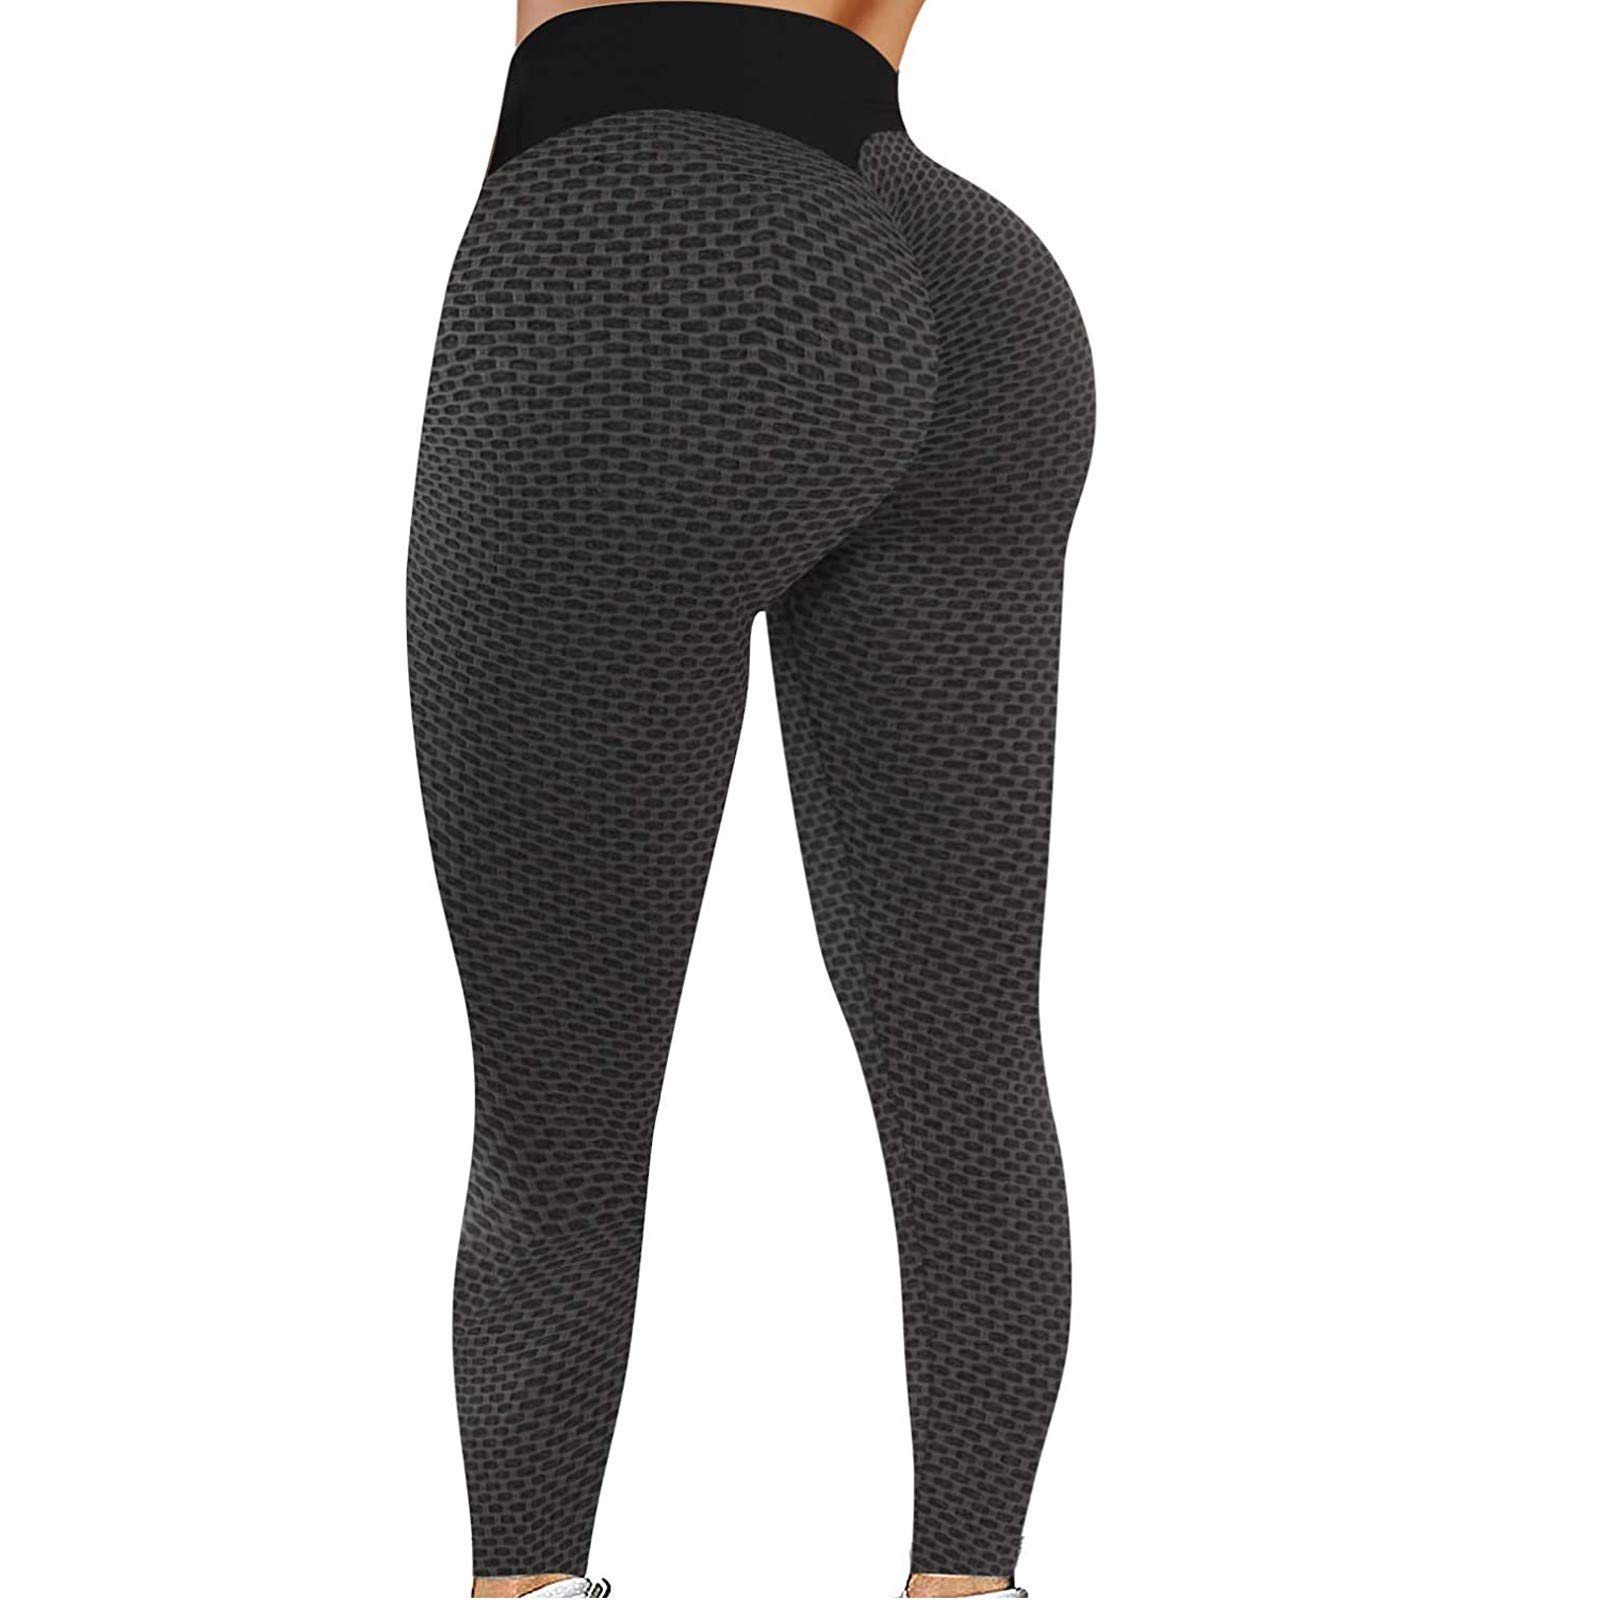 YRAETENM Sexy Yoga Pants for Women Butt Lifting Anti Cellulite Workout  Leggings High Waist Tights Running